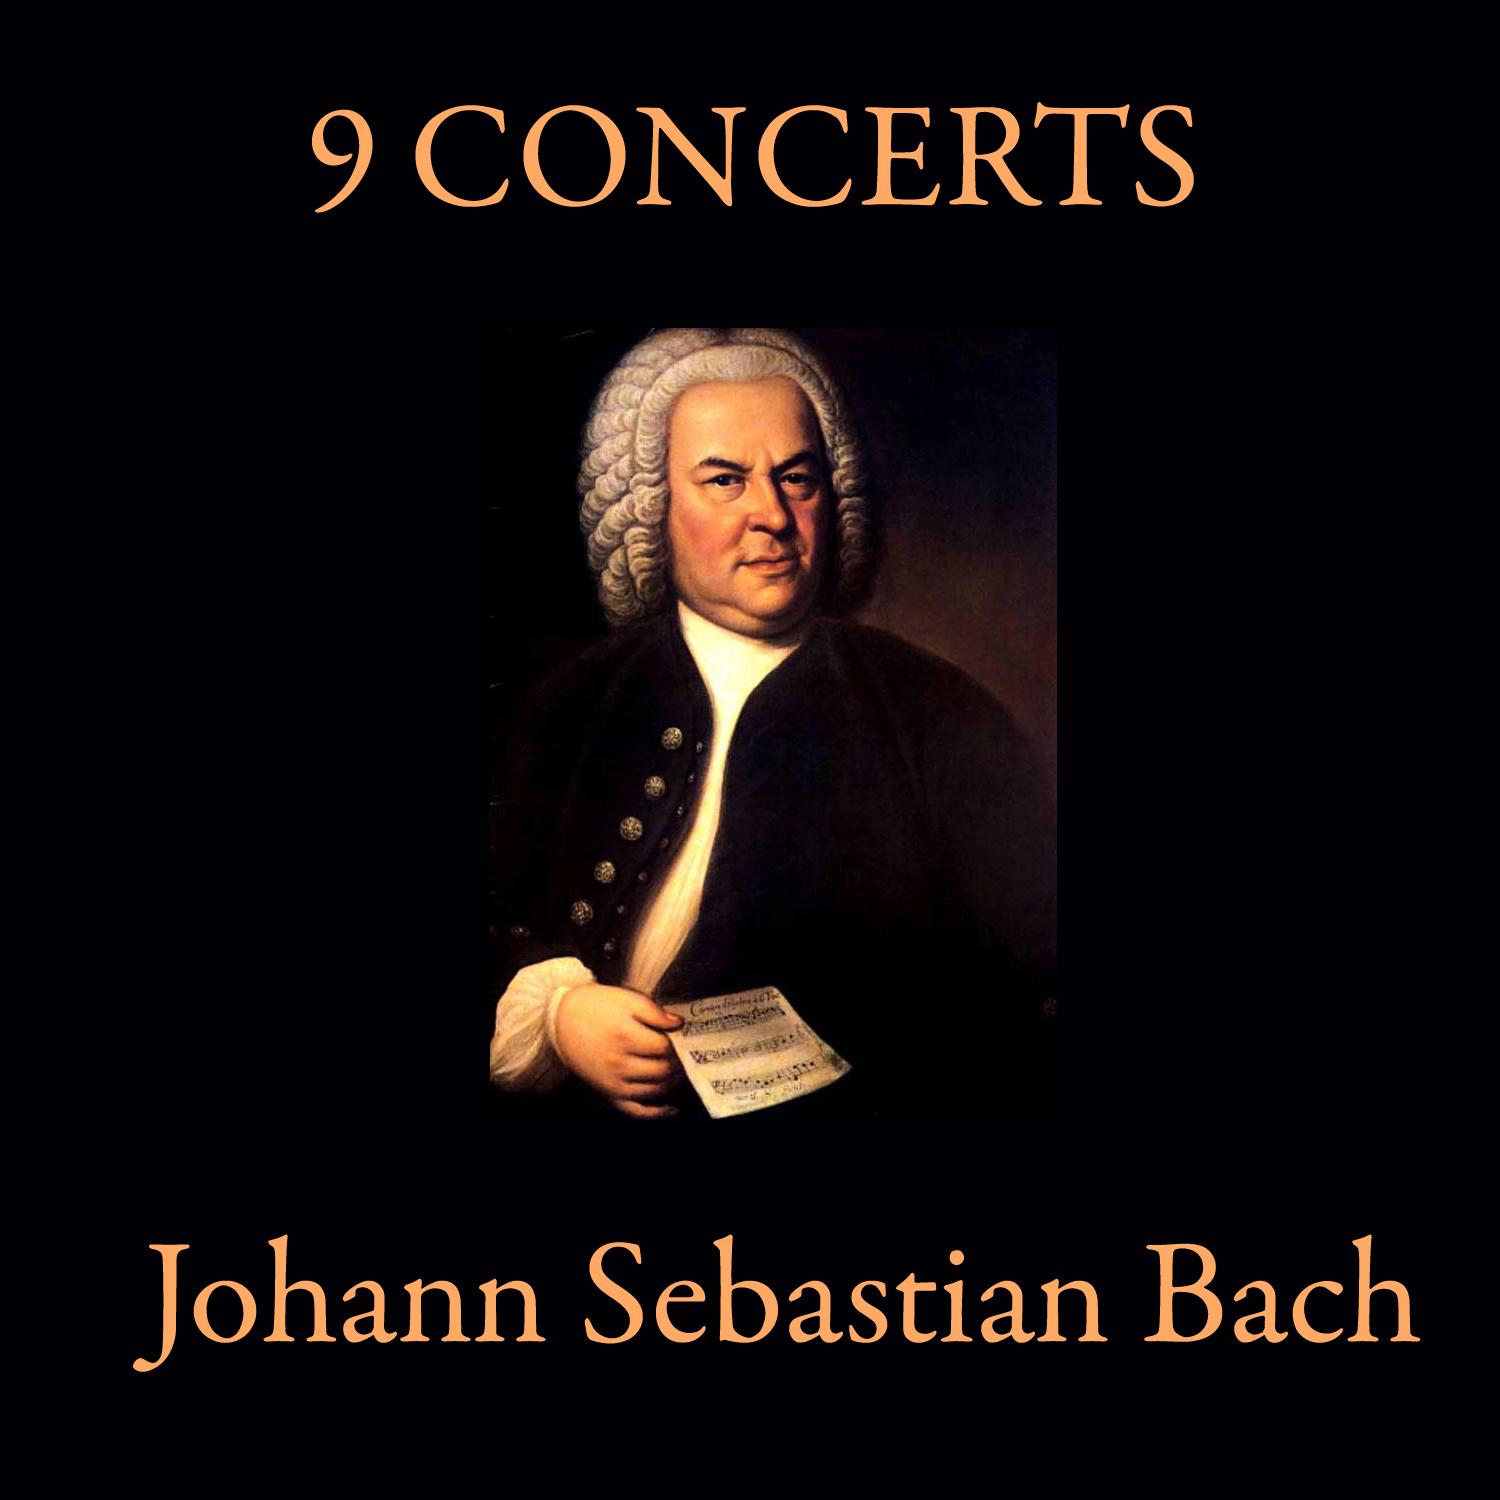 Concerto for violin strings and basso continuo in A minor (BWV 1041) Allegro